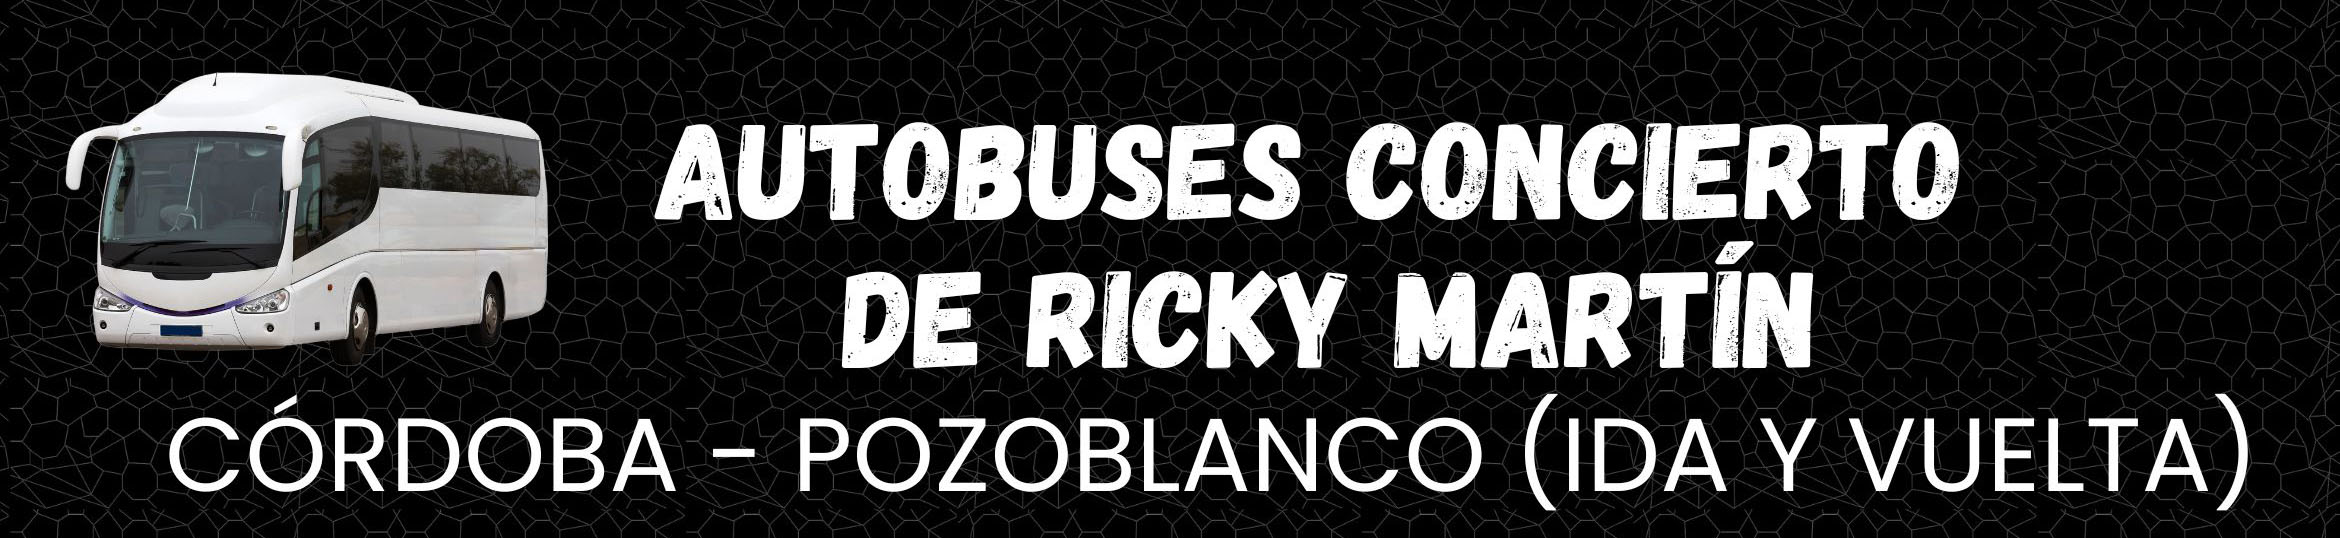 Autobuses Ricky Martin Pozoblanco